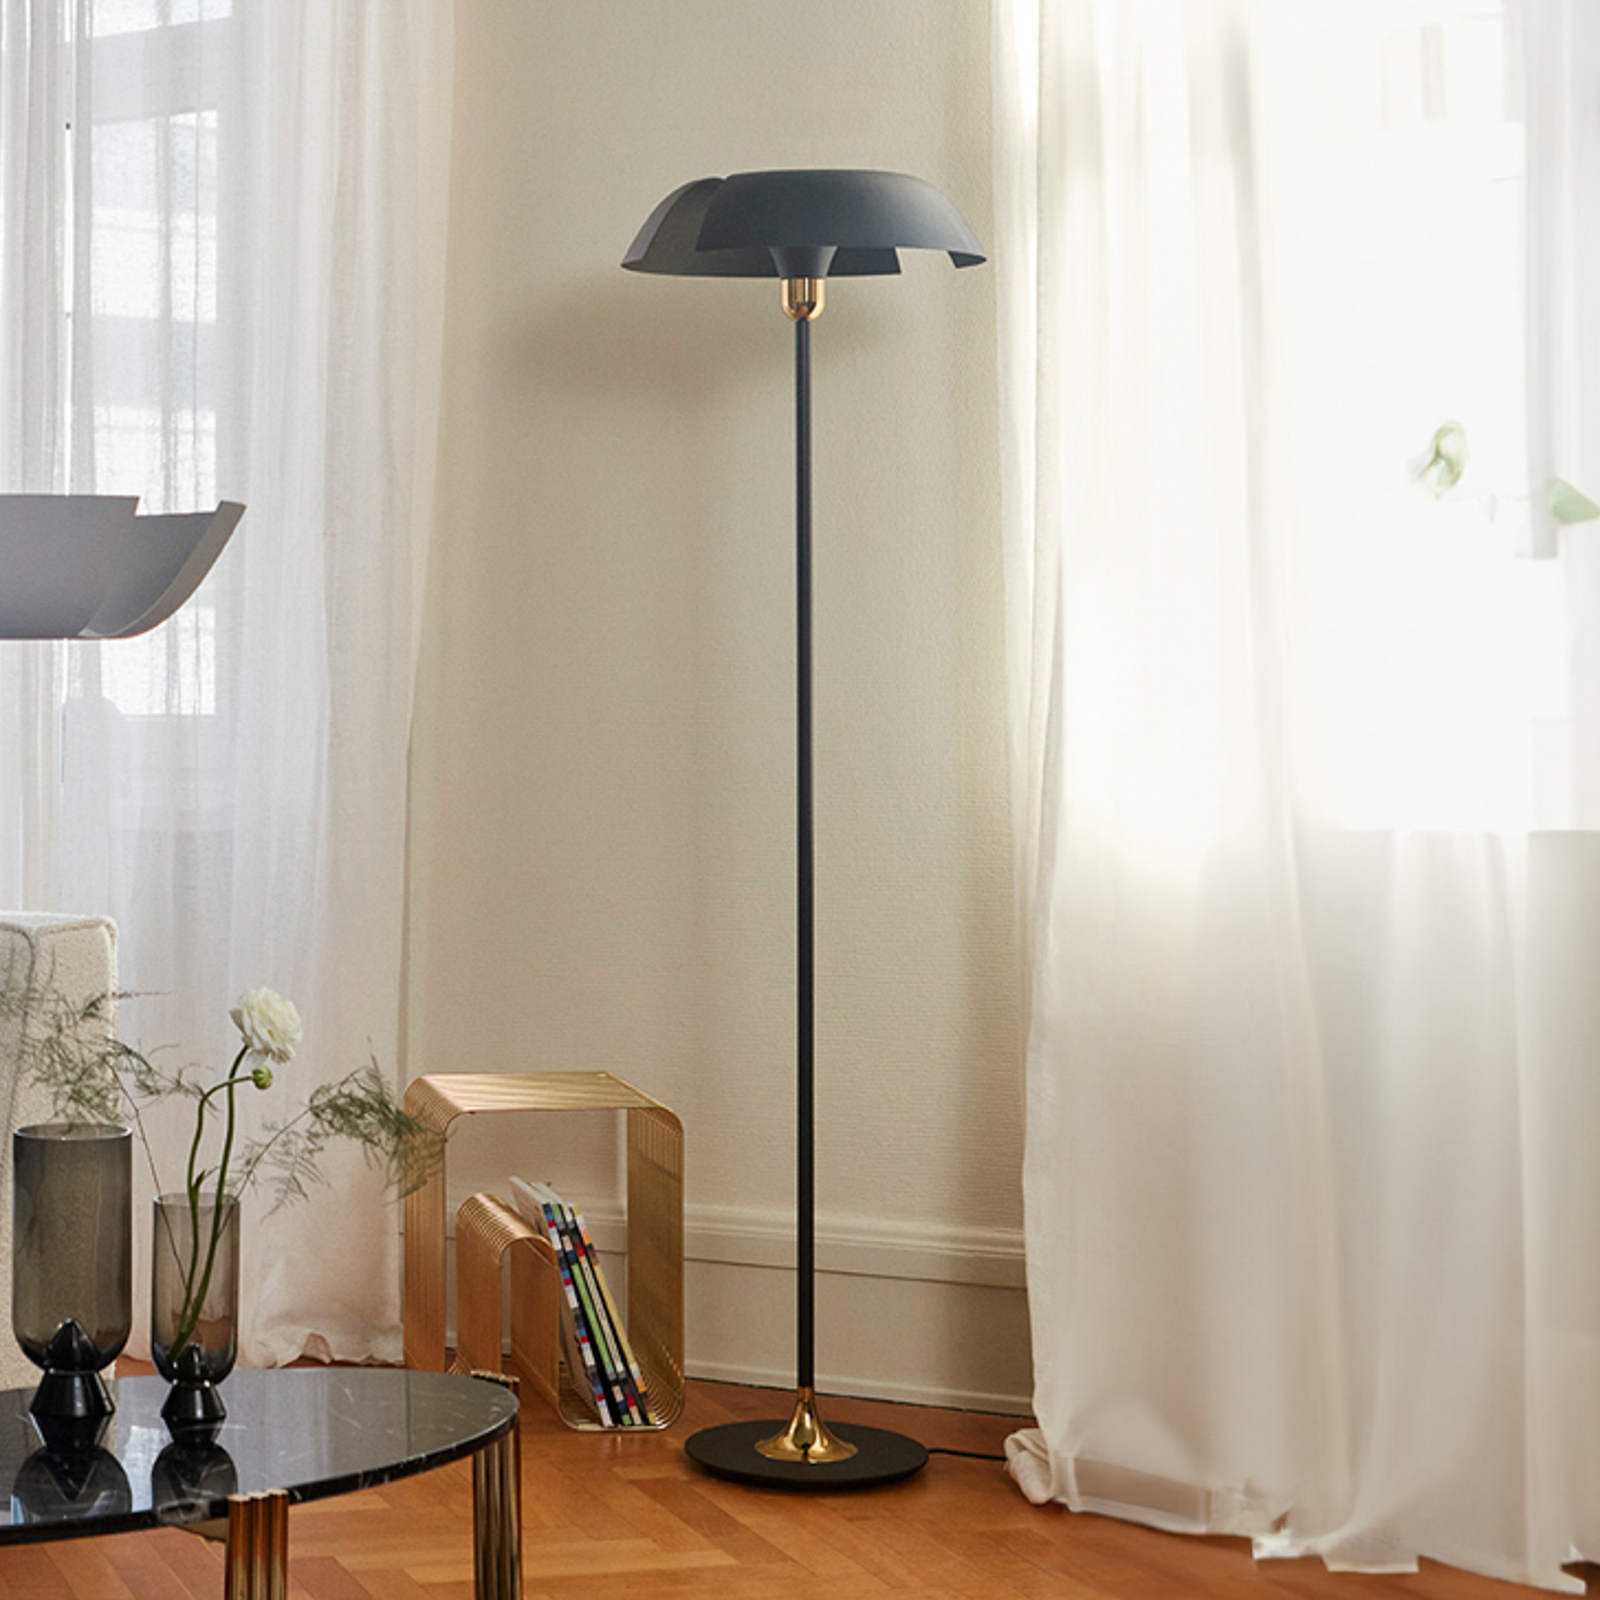 AYTM Cycnus floor lamp, black, iron, height 160 cm, E27